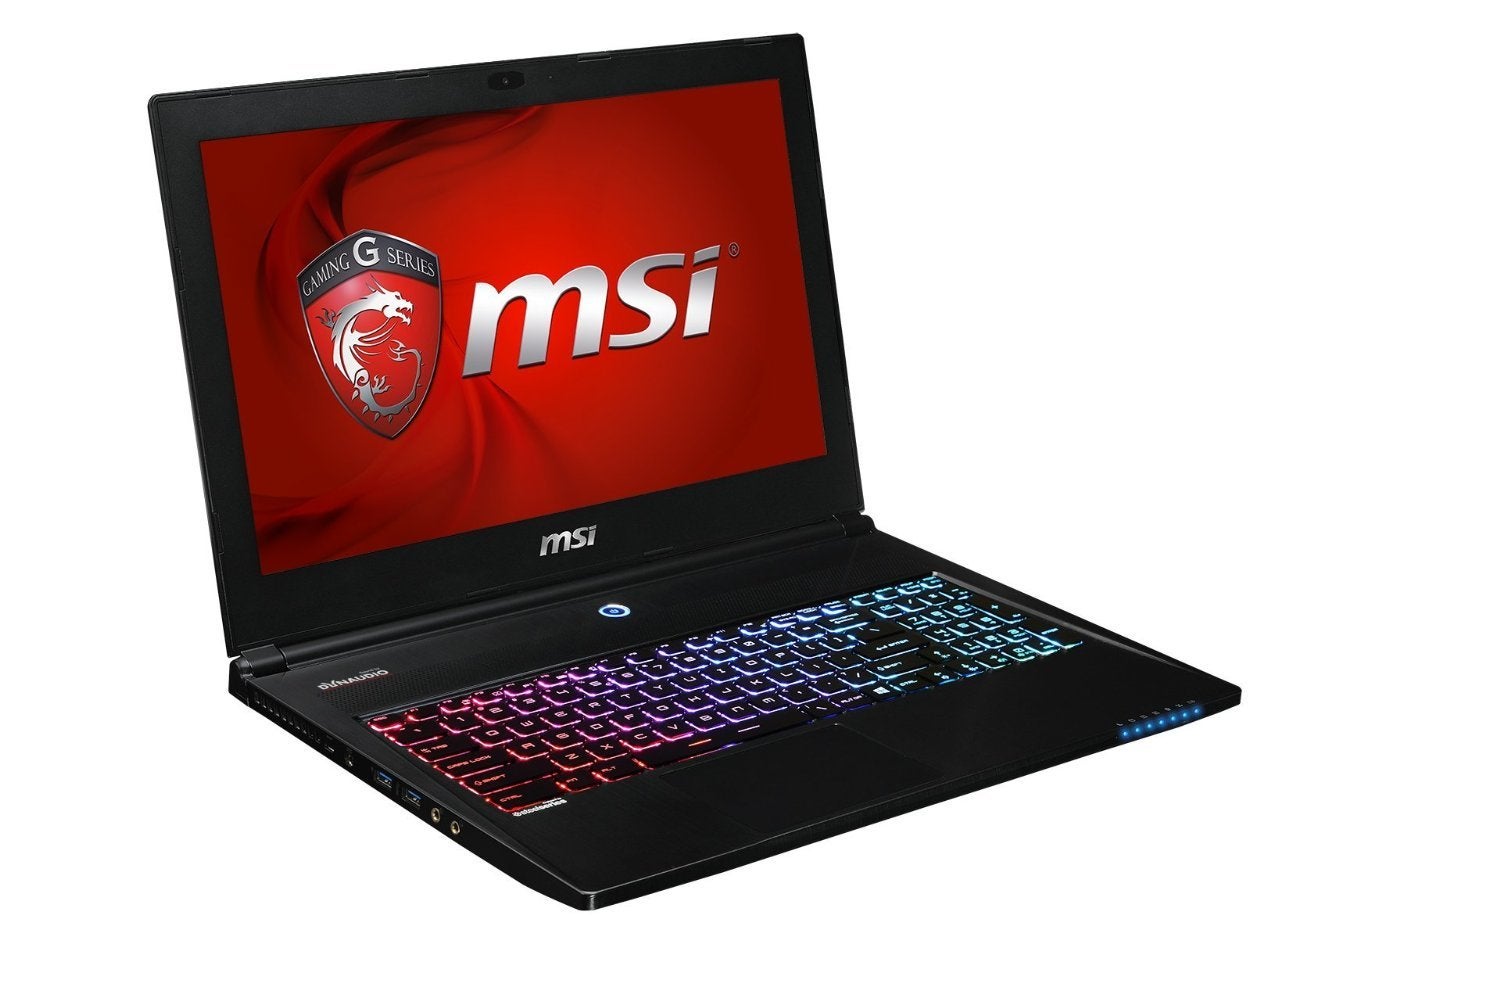 Выключается ноутбук msi. Ноутбук MSI gs60 2pe Ghost Pro 3k Edition. Ноутбук MSI gs60 6qc Ghost. Игровой ноутбук MSI gs70 Intel Core i7 16gb, GEFORCE GTX 765m.